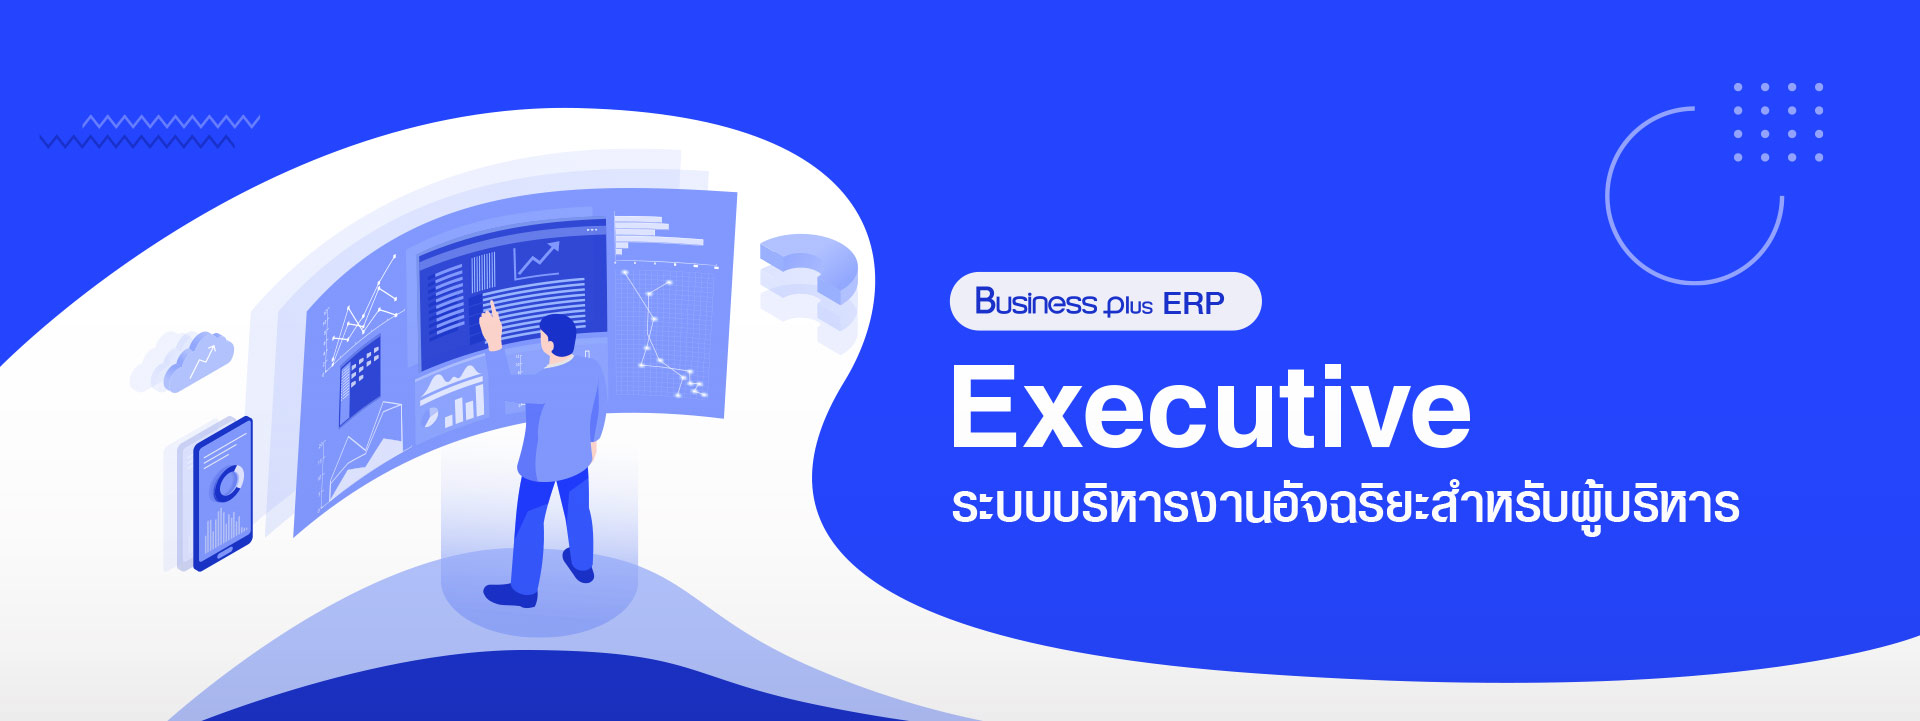 banner_ERP_Executive.jpg